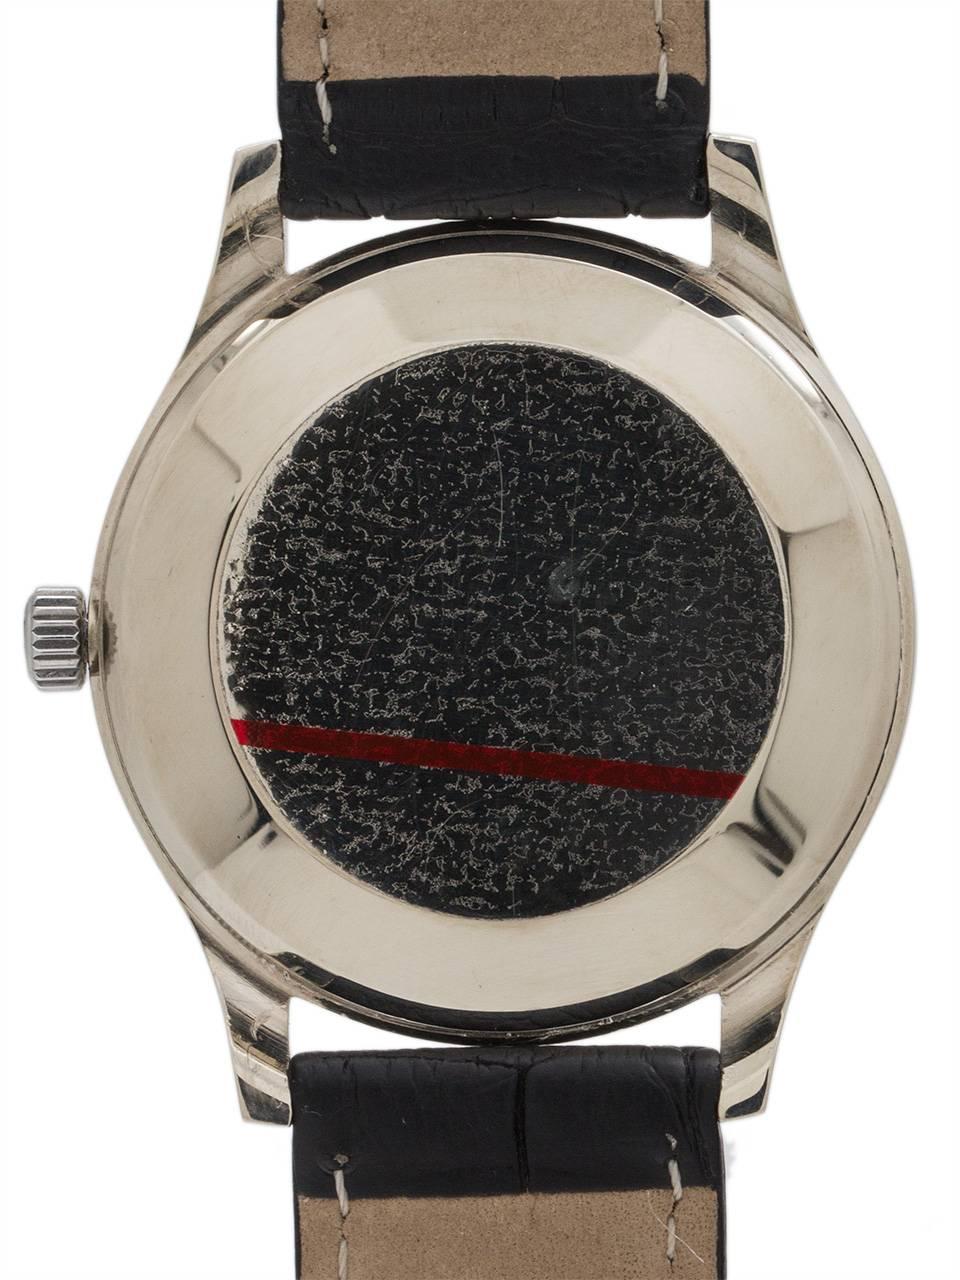 Men's IWC Schaffhausen White Gold Date Automatic Wristwatch, circa 1964